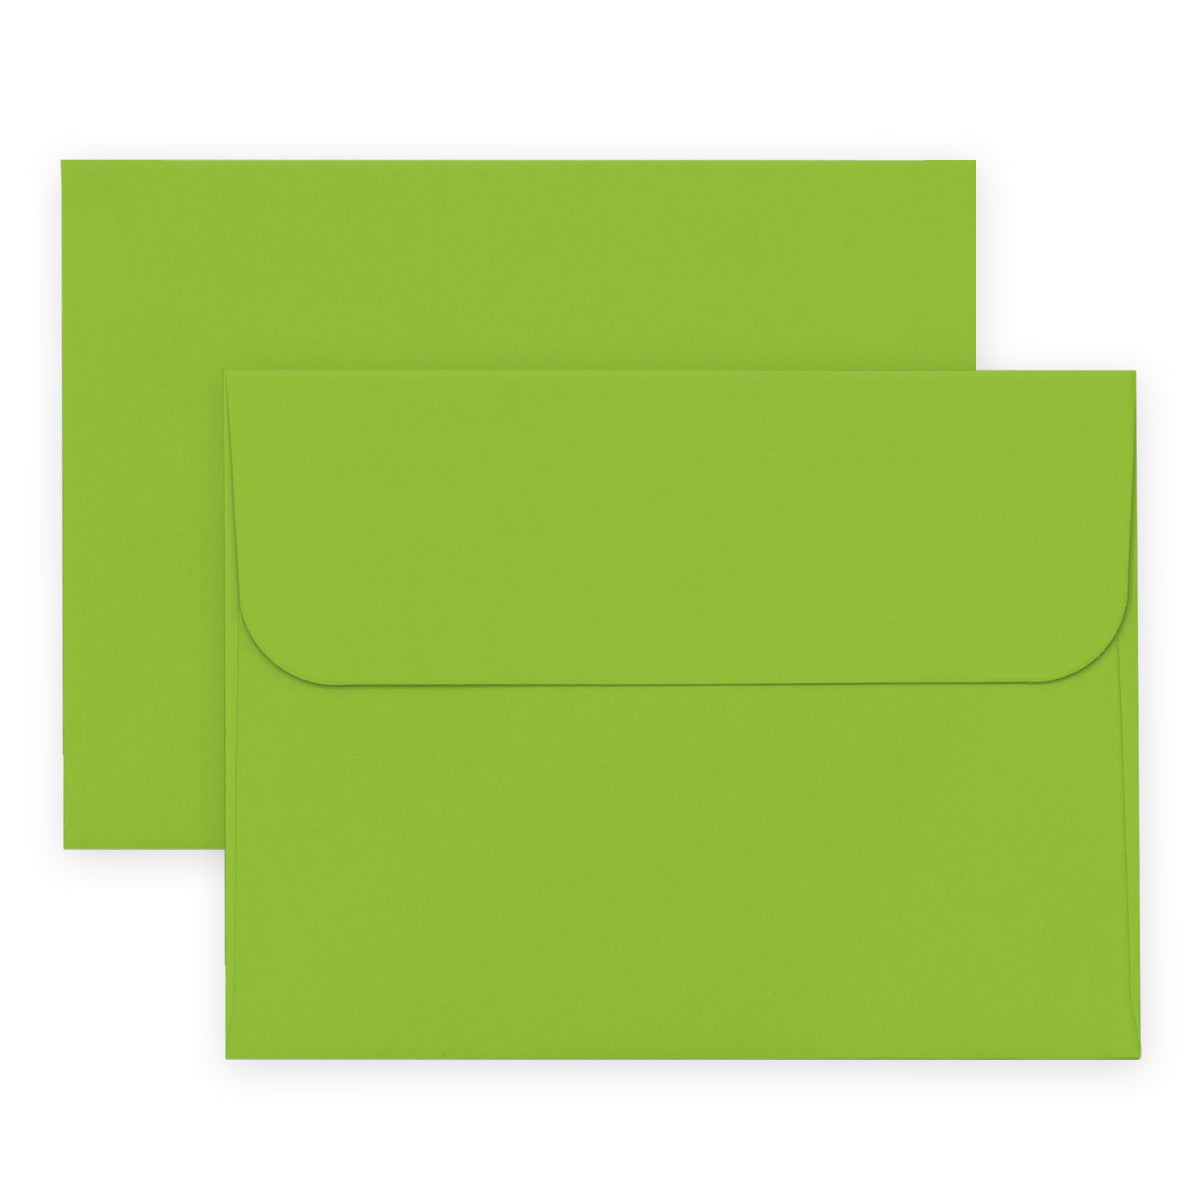 Envelope Crafty Necessities: Parrot Envelope (12/pk)